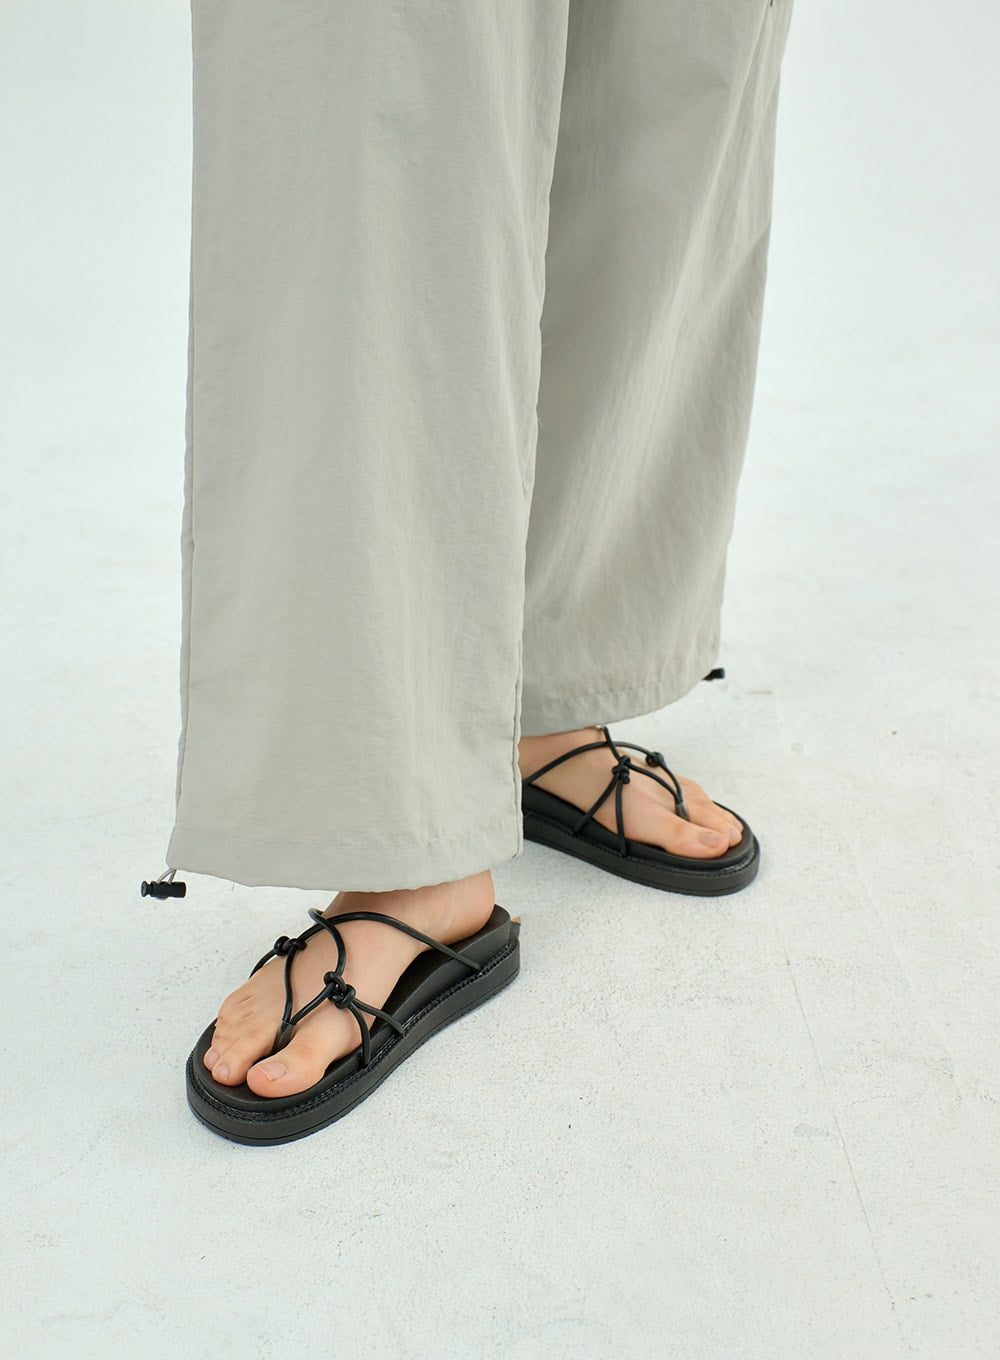 Slide Sandals BY303